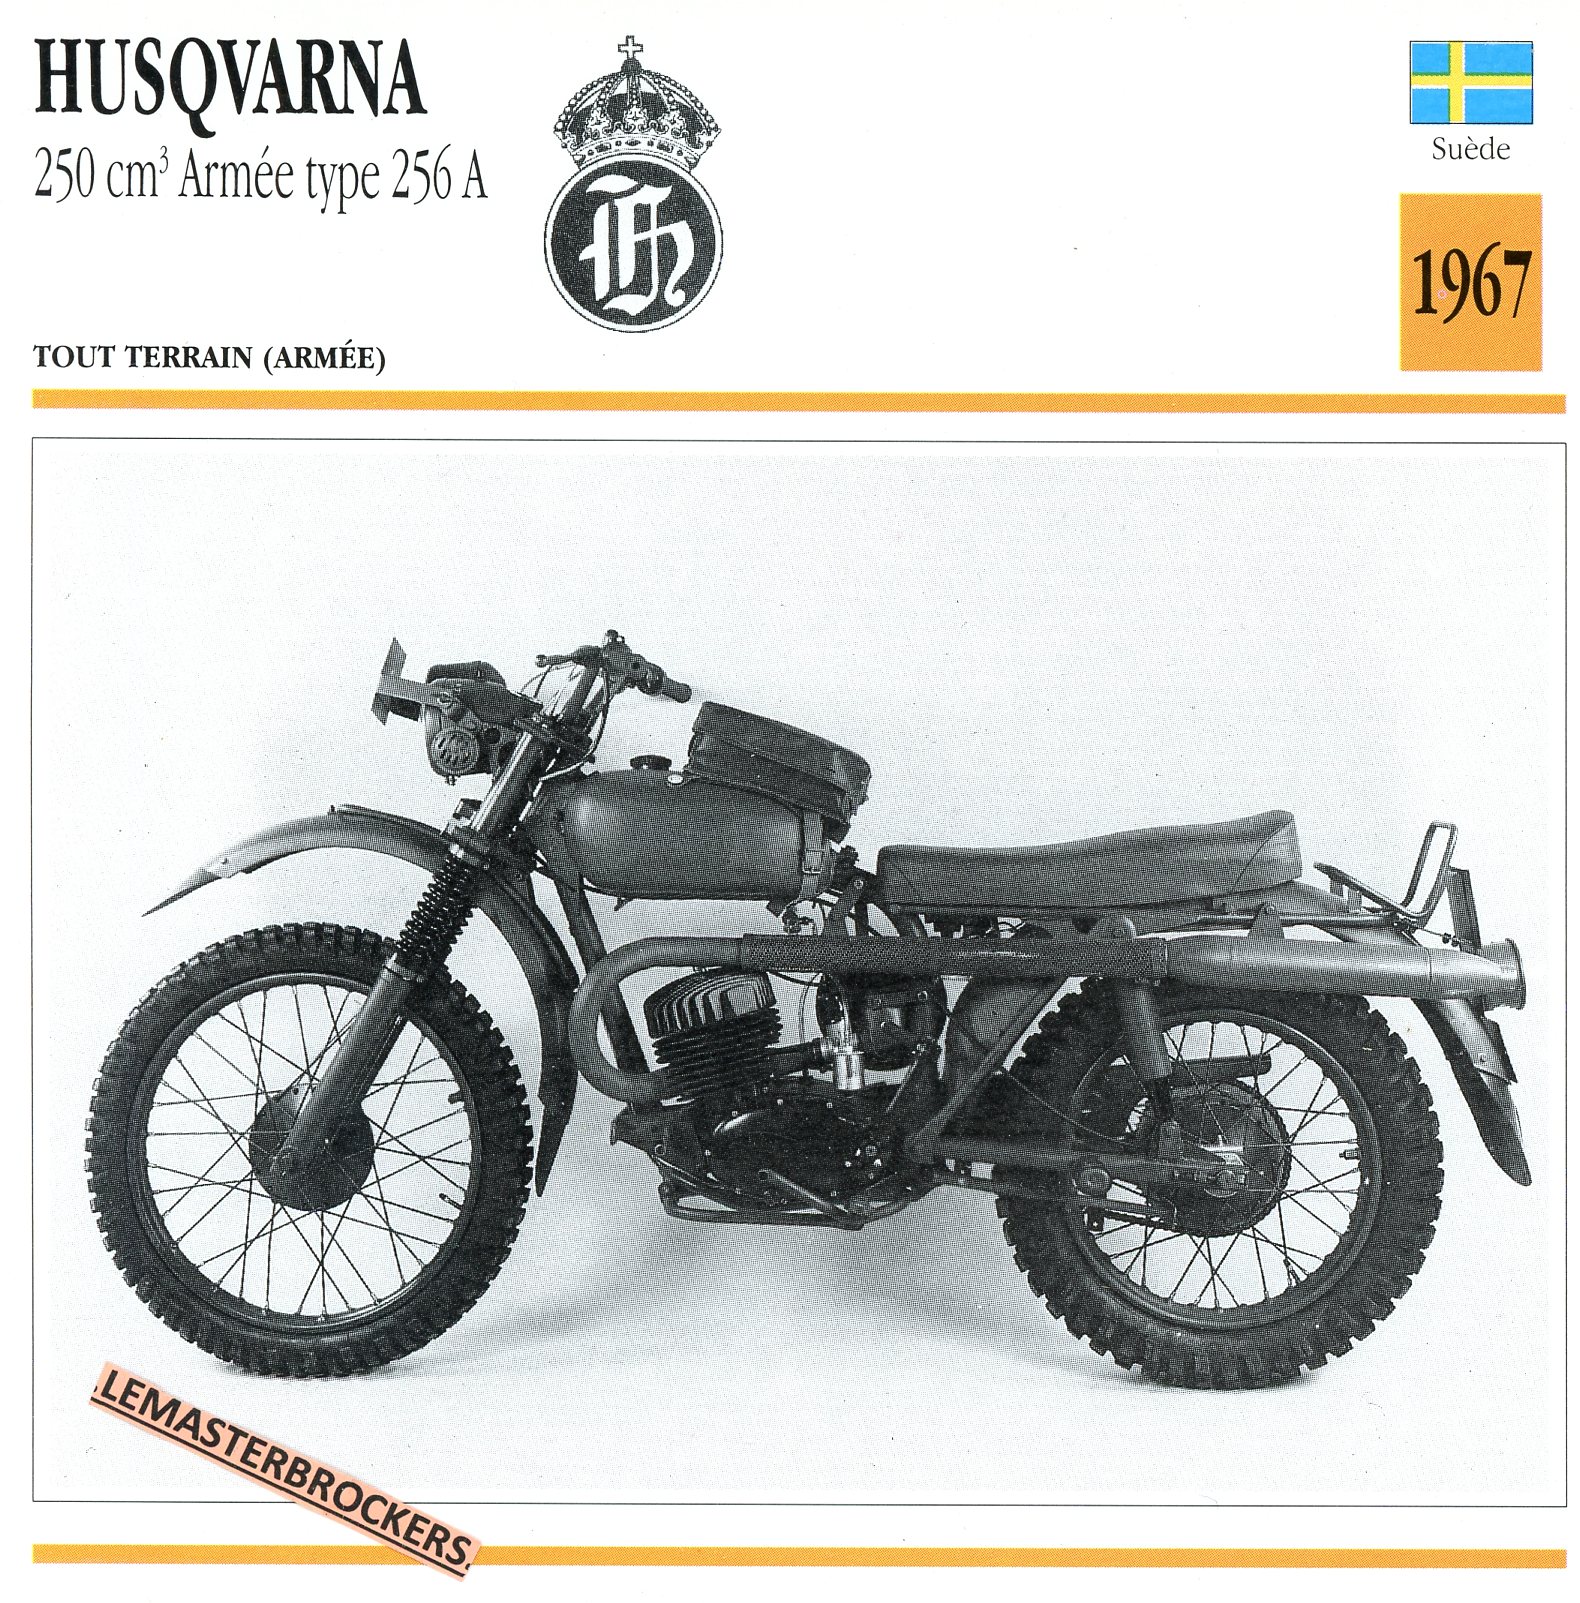 HUSQVARNA-250-ARMÉE-TYPE-256A-1967-FICHE-MOTO-LEMASTERBROCKERS